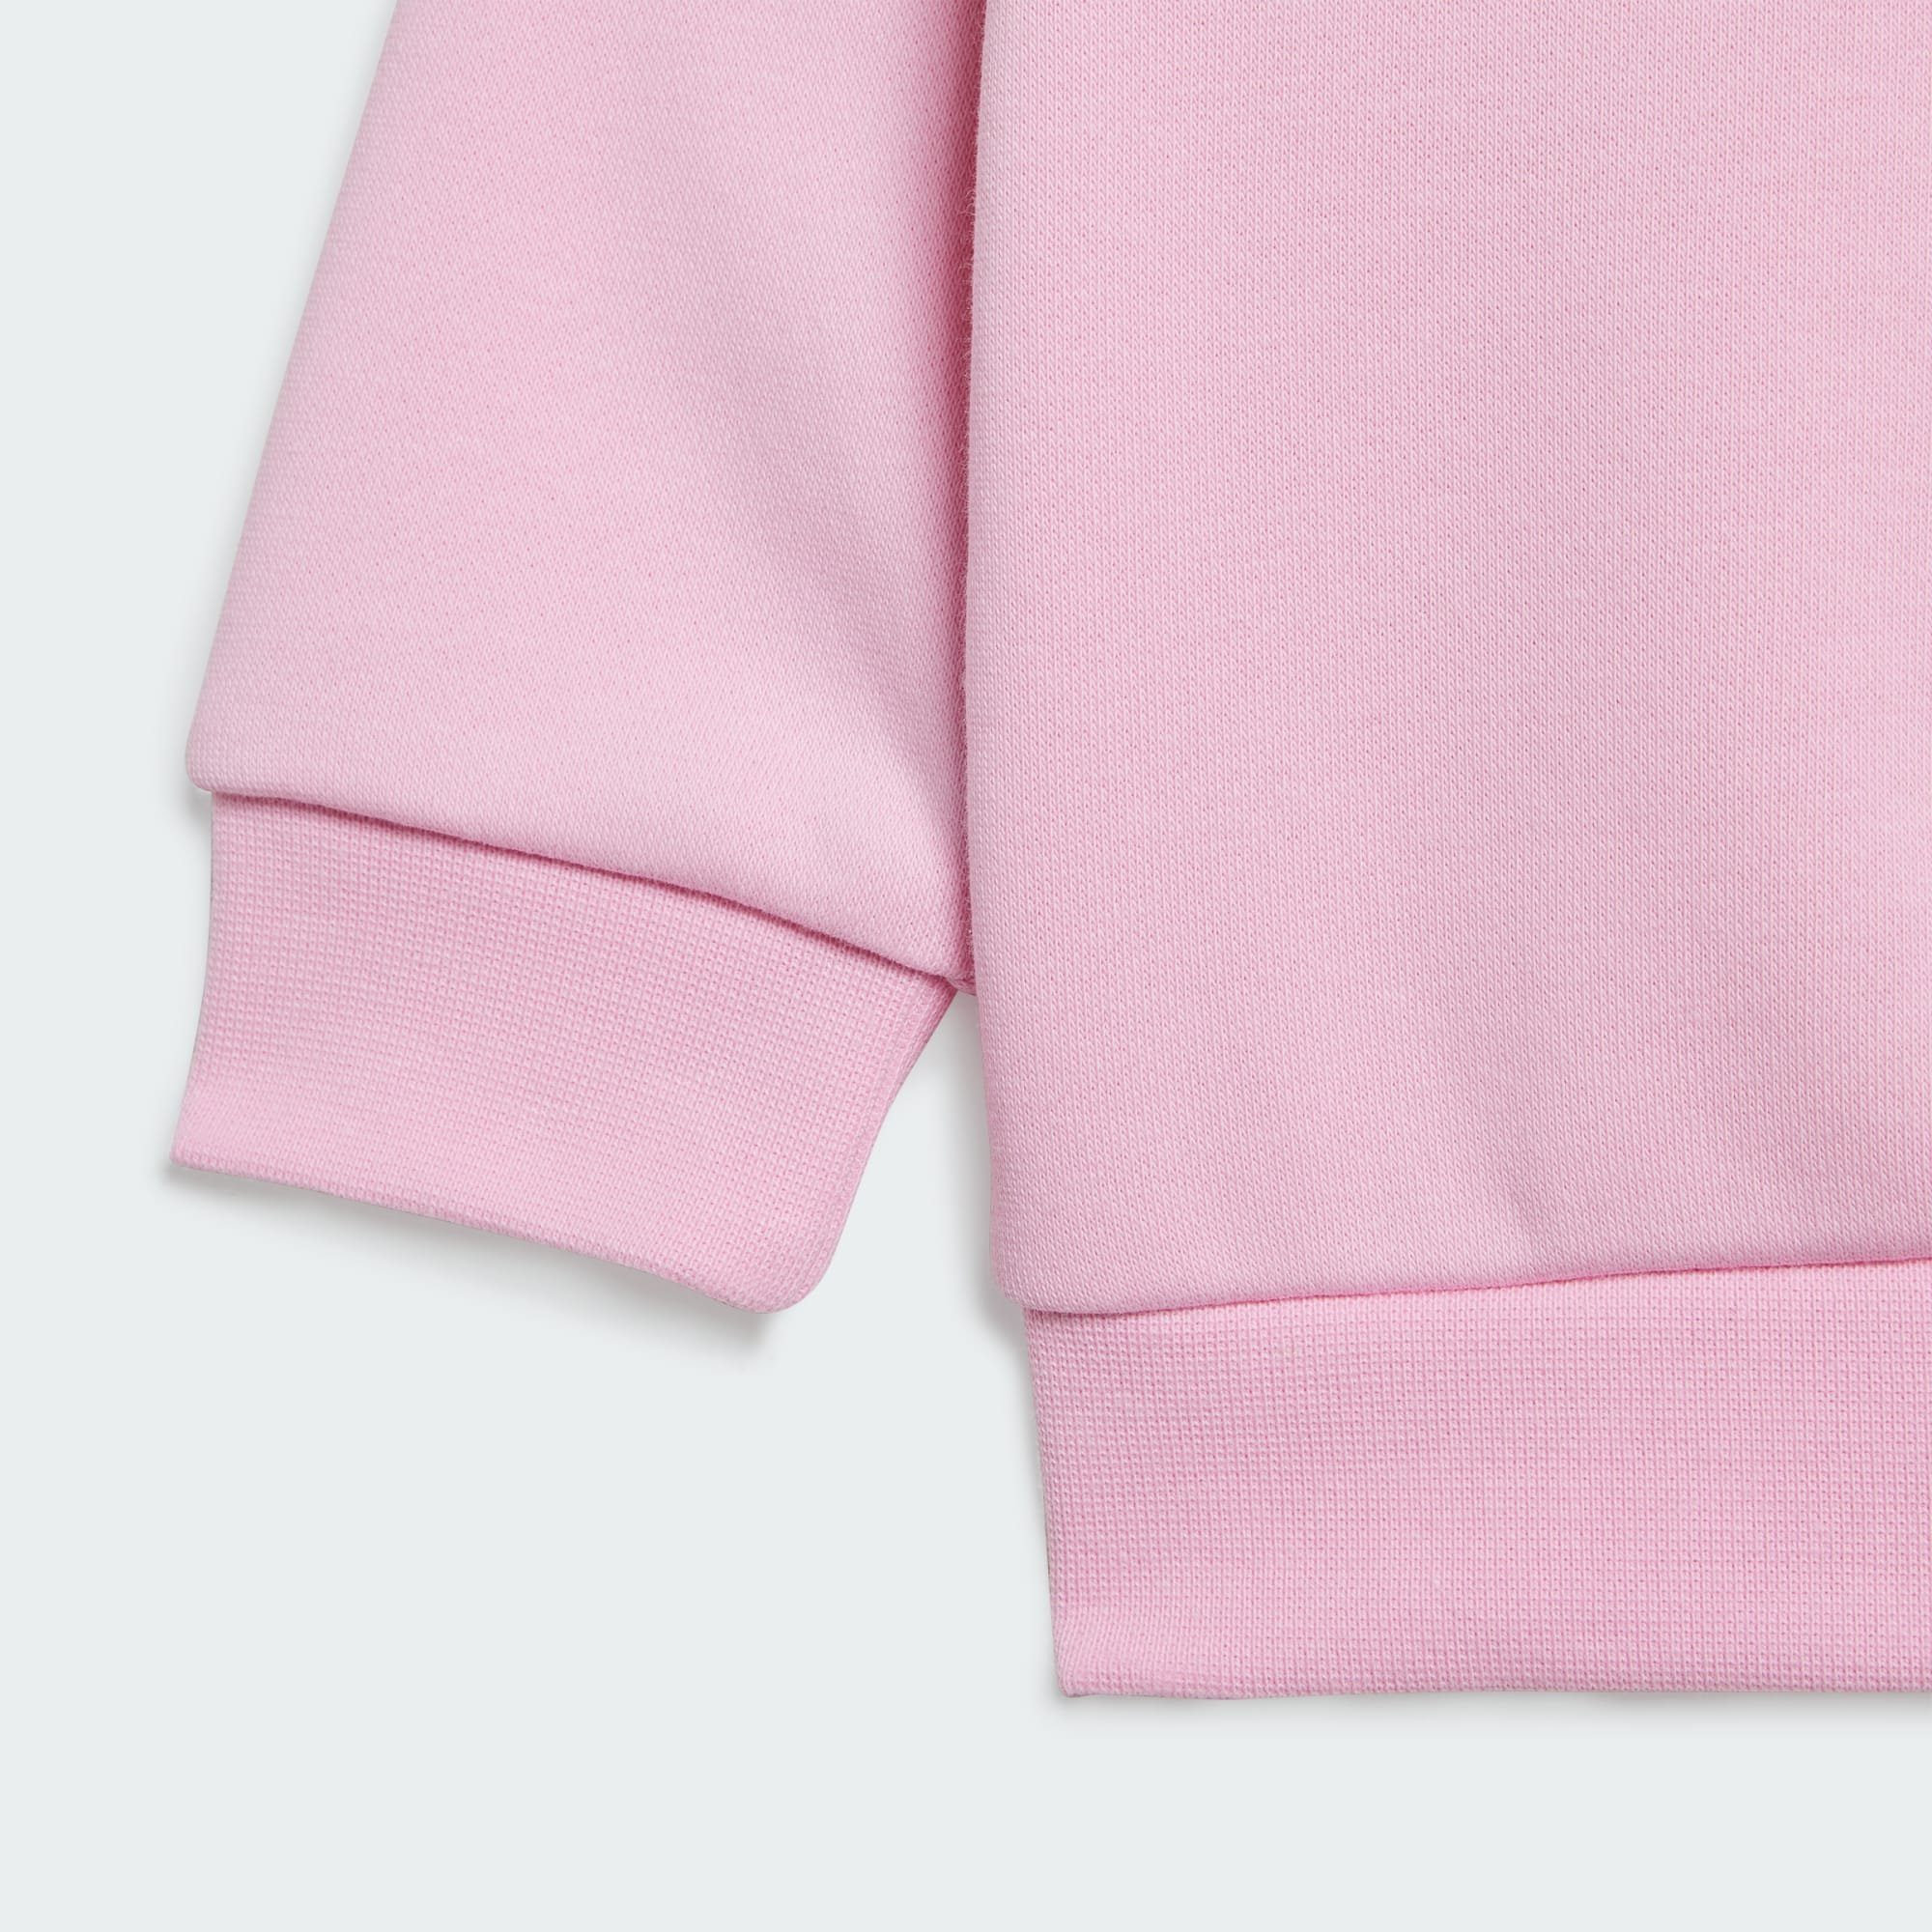 True ADICOLOR adidas SET Pink Trainingsanzug Originals